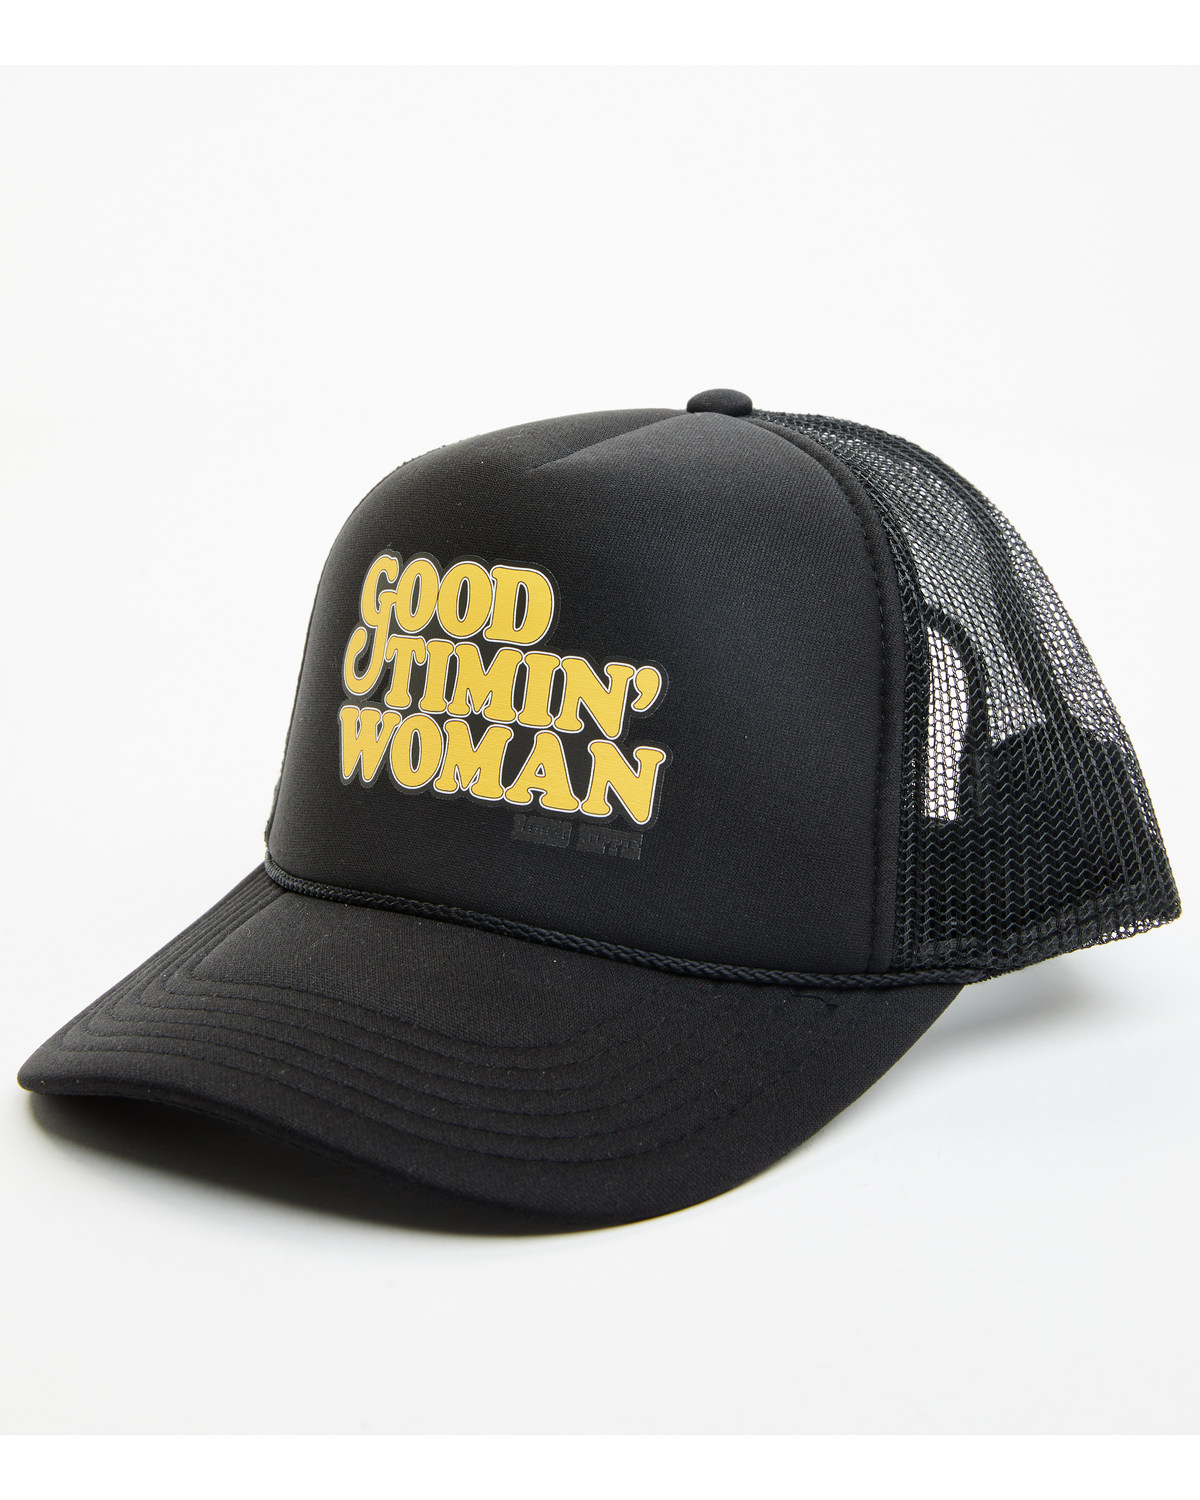 Rodeo Hippie Women's Good Timin' Woman Trucker Cap